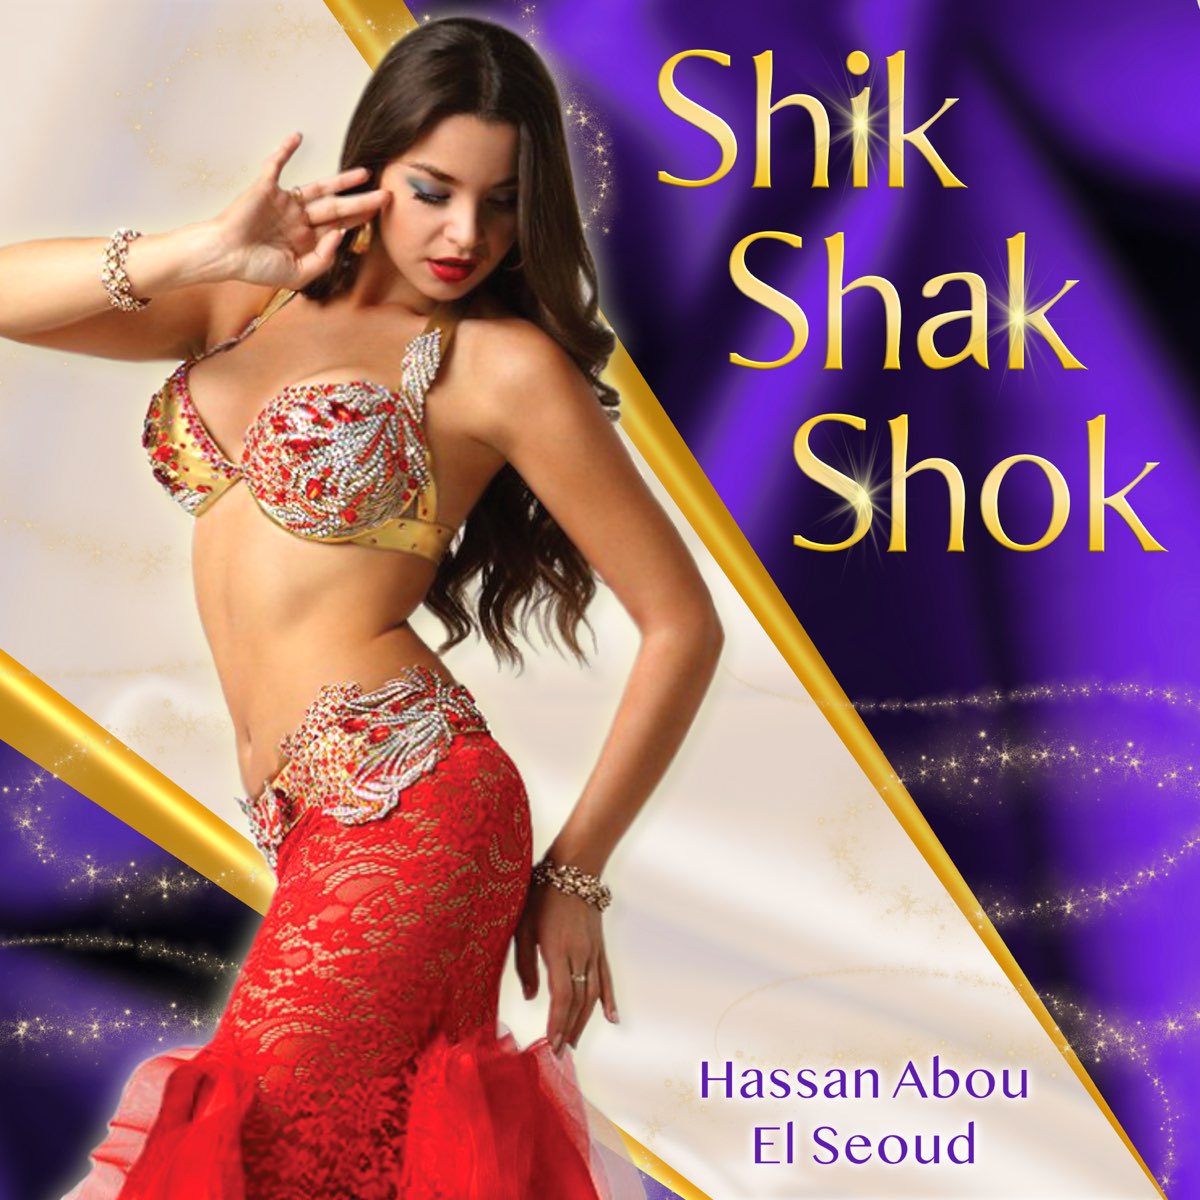 Арабские песни шик шак шок. Shik Shak Shok. Hassan Abou el Seoud - Shik Shak Shok. Шик Шак ШОК танец живота. Mezdeke - Shik Shak Shok.